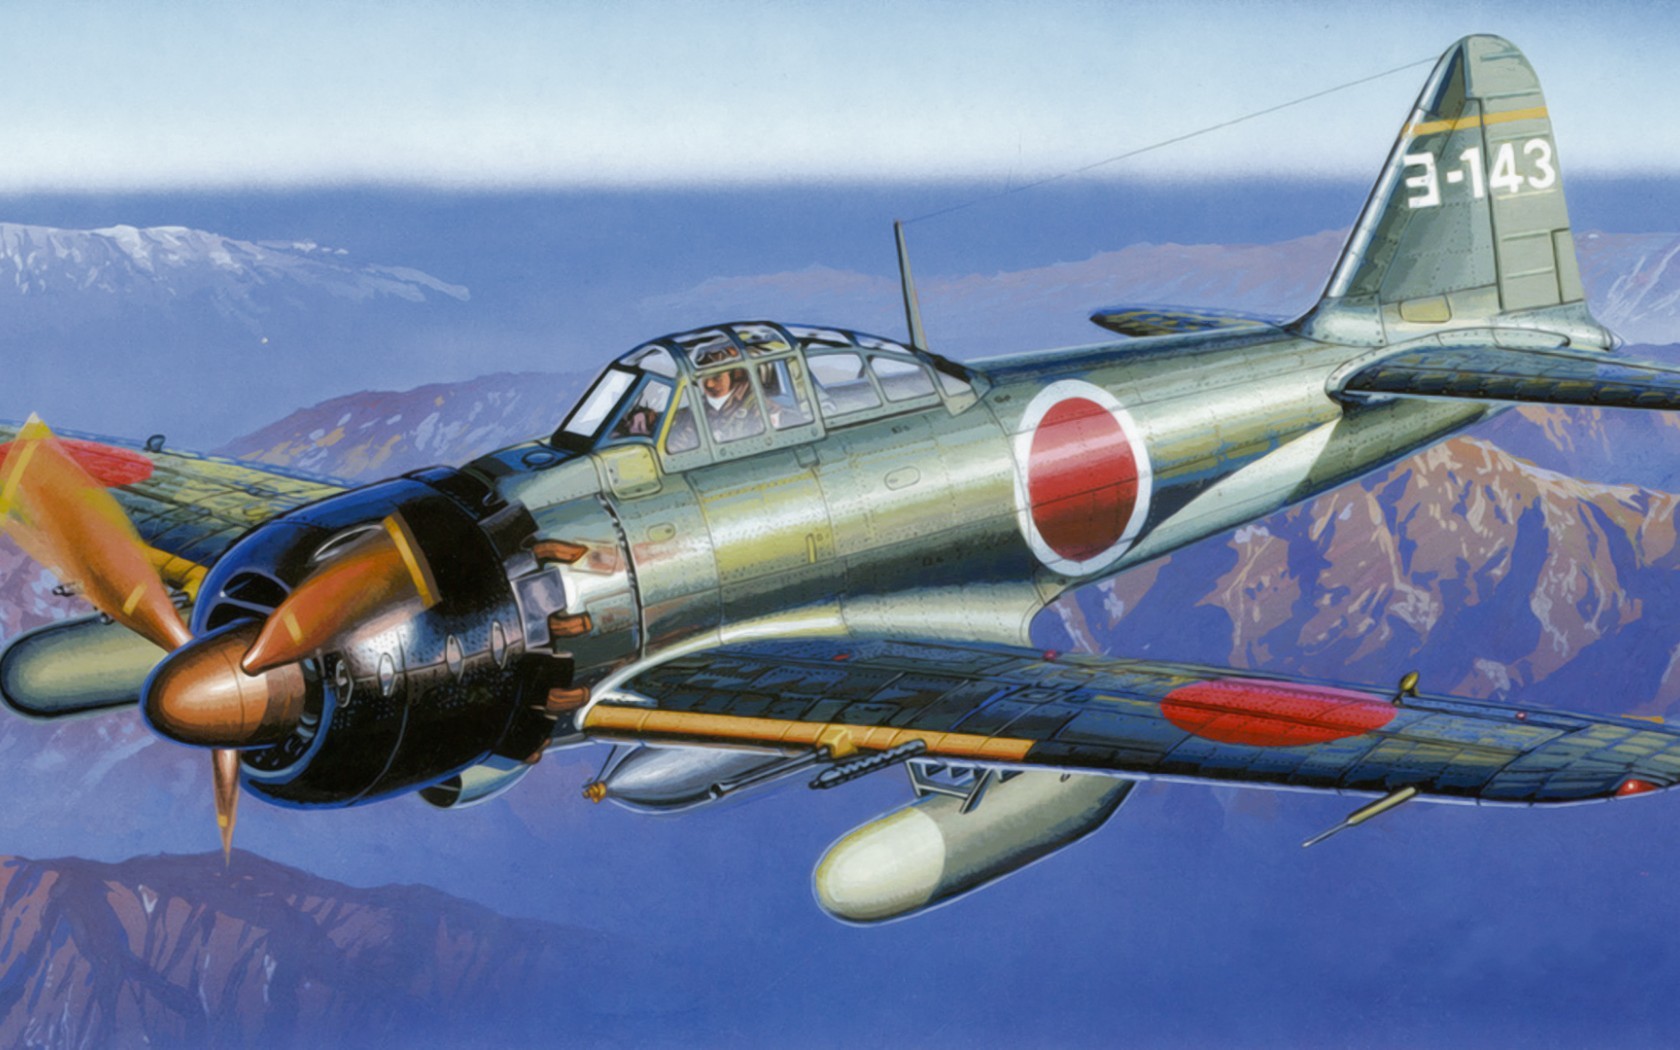 Wallpaper, 1680x1050 px, airplane, Japan, Japanese, military aircraft, Mitsubishi, World War II, Zero 1680x1050